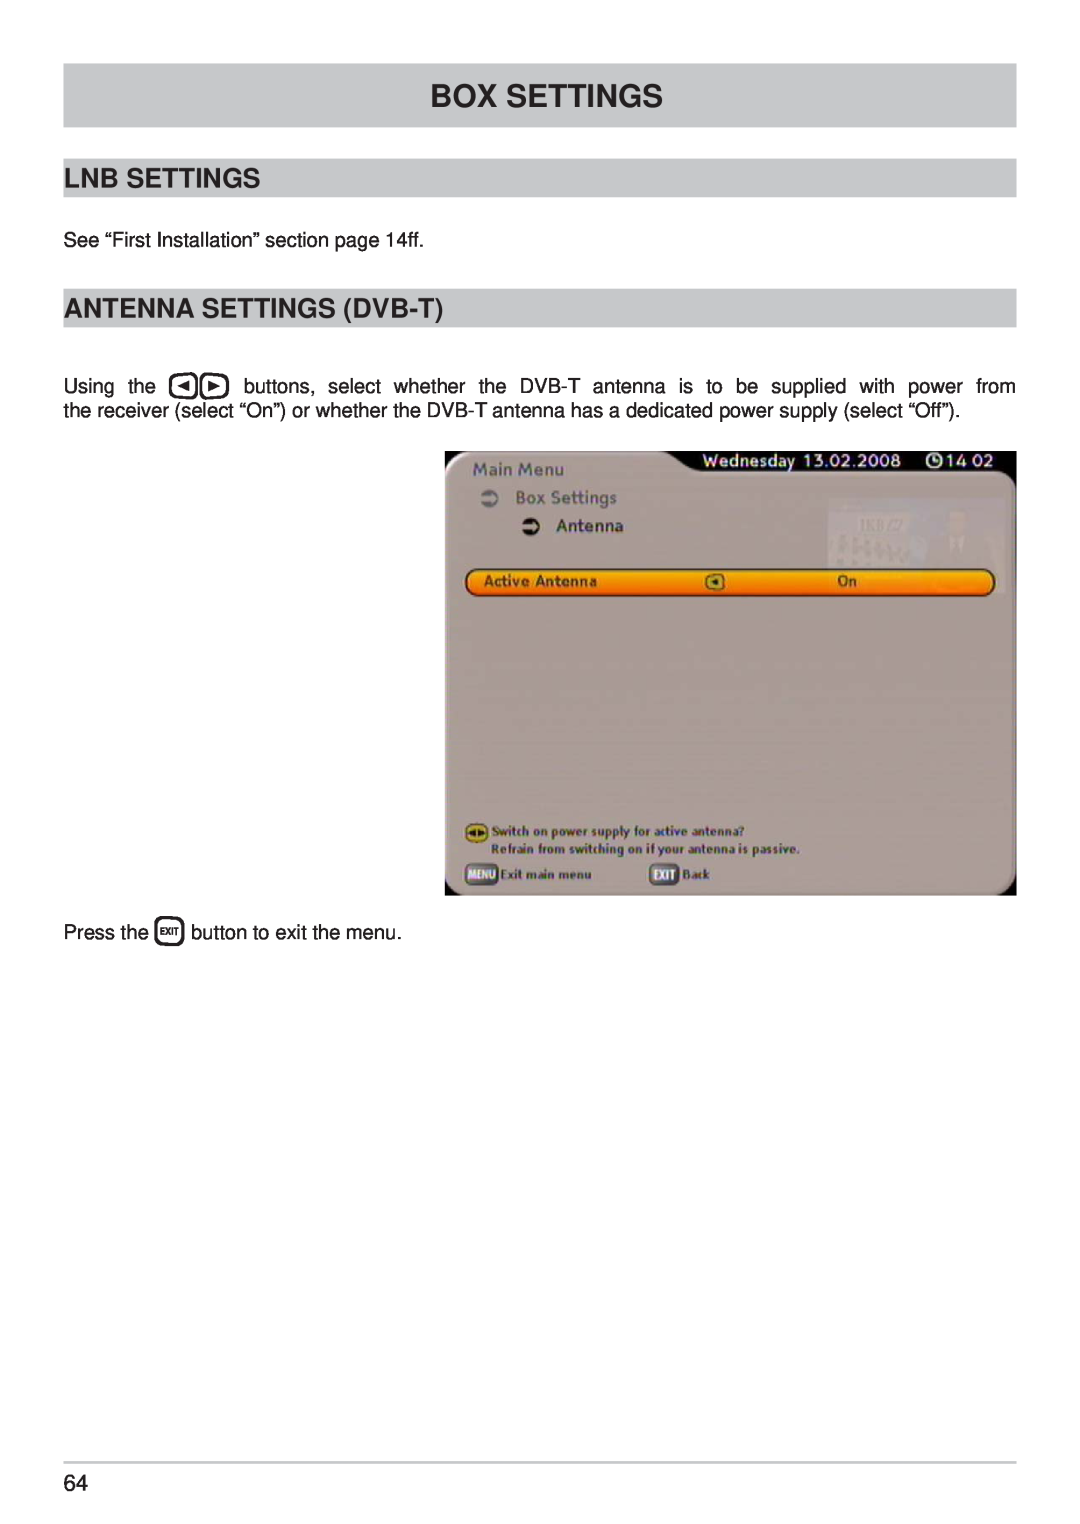 Kathrein UFS 790sw, UFS 790si manual Lnb Settings, Antenna Settings Dvb-T, Box Settings 